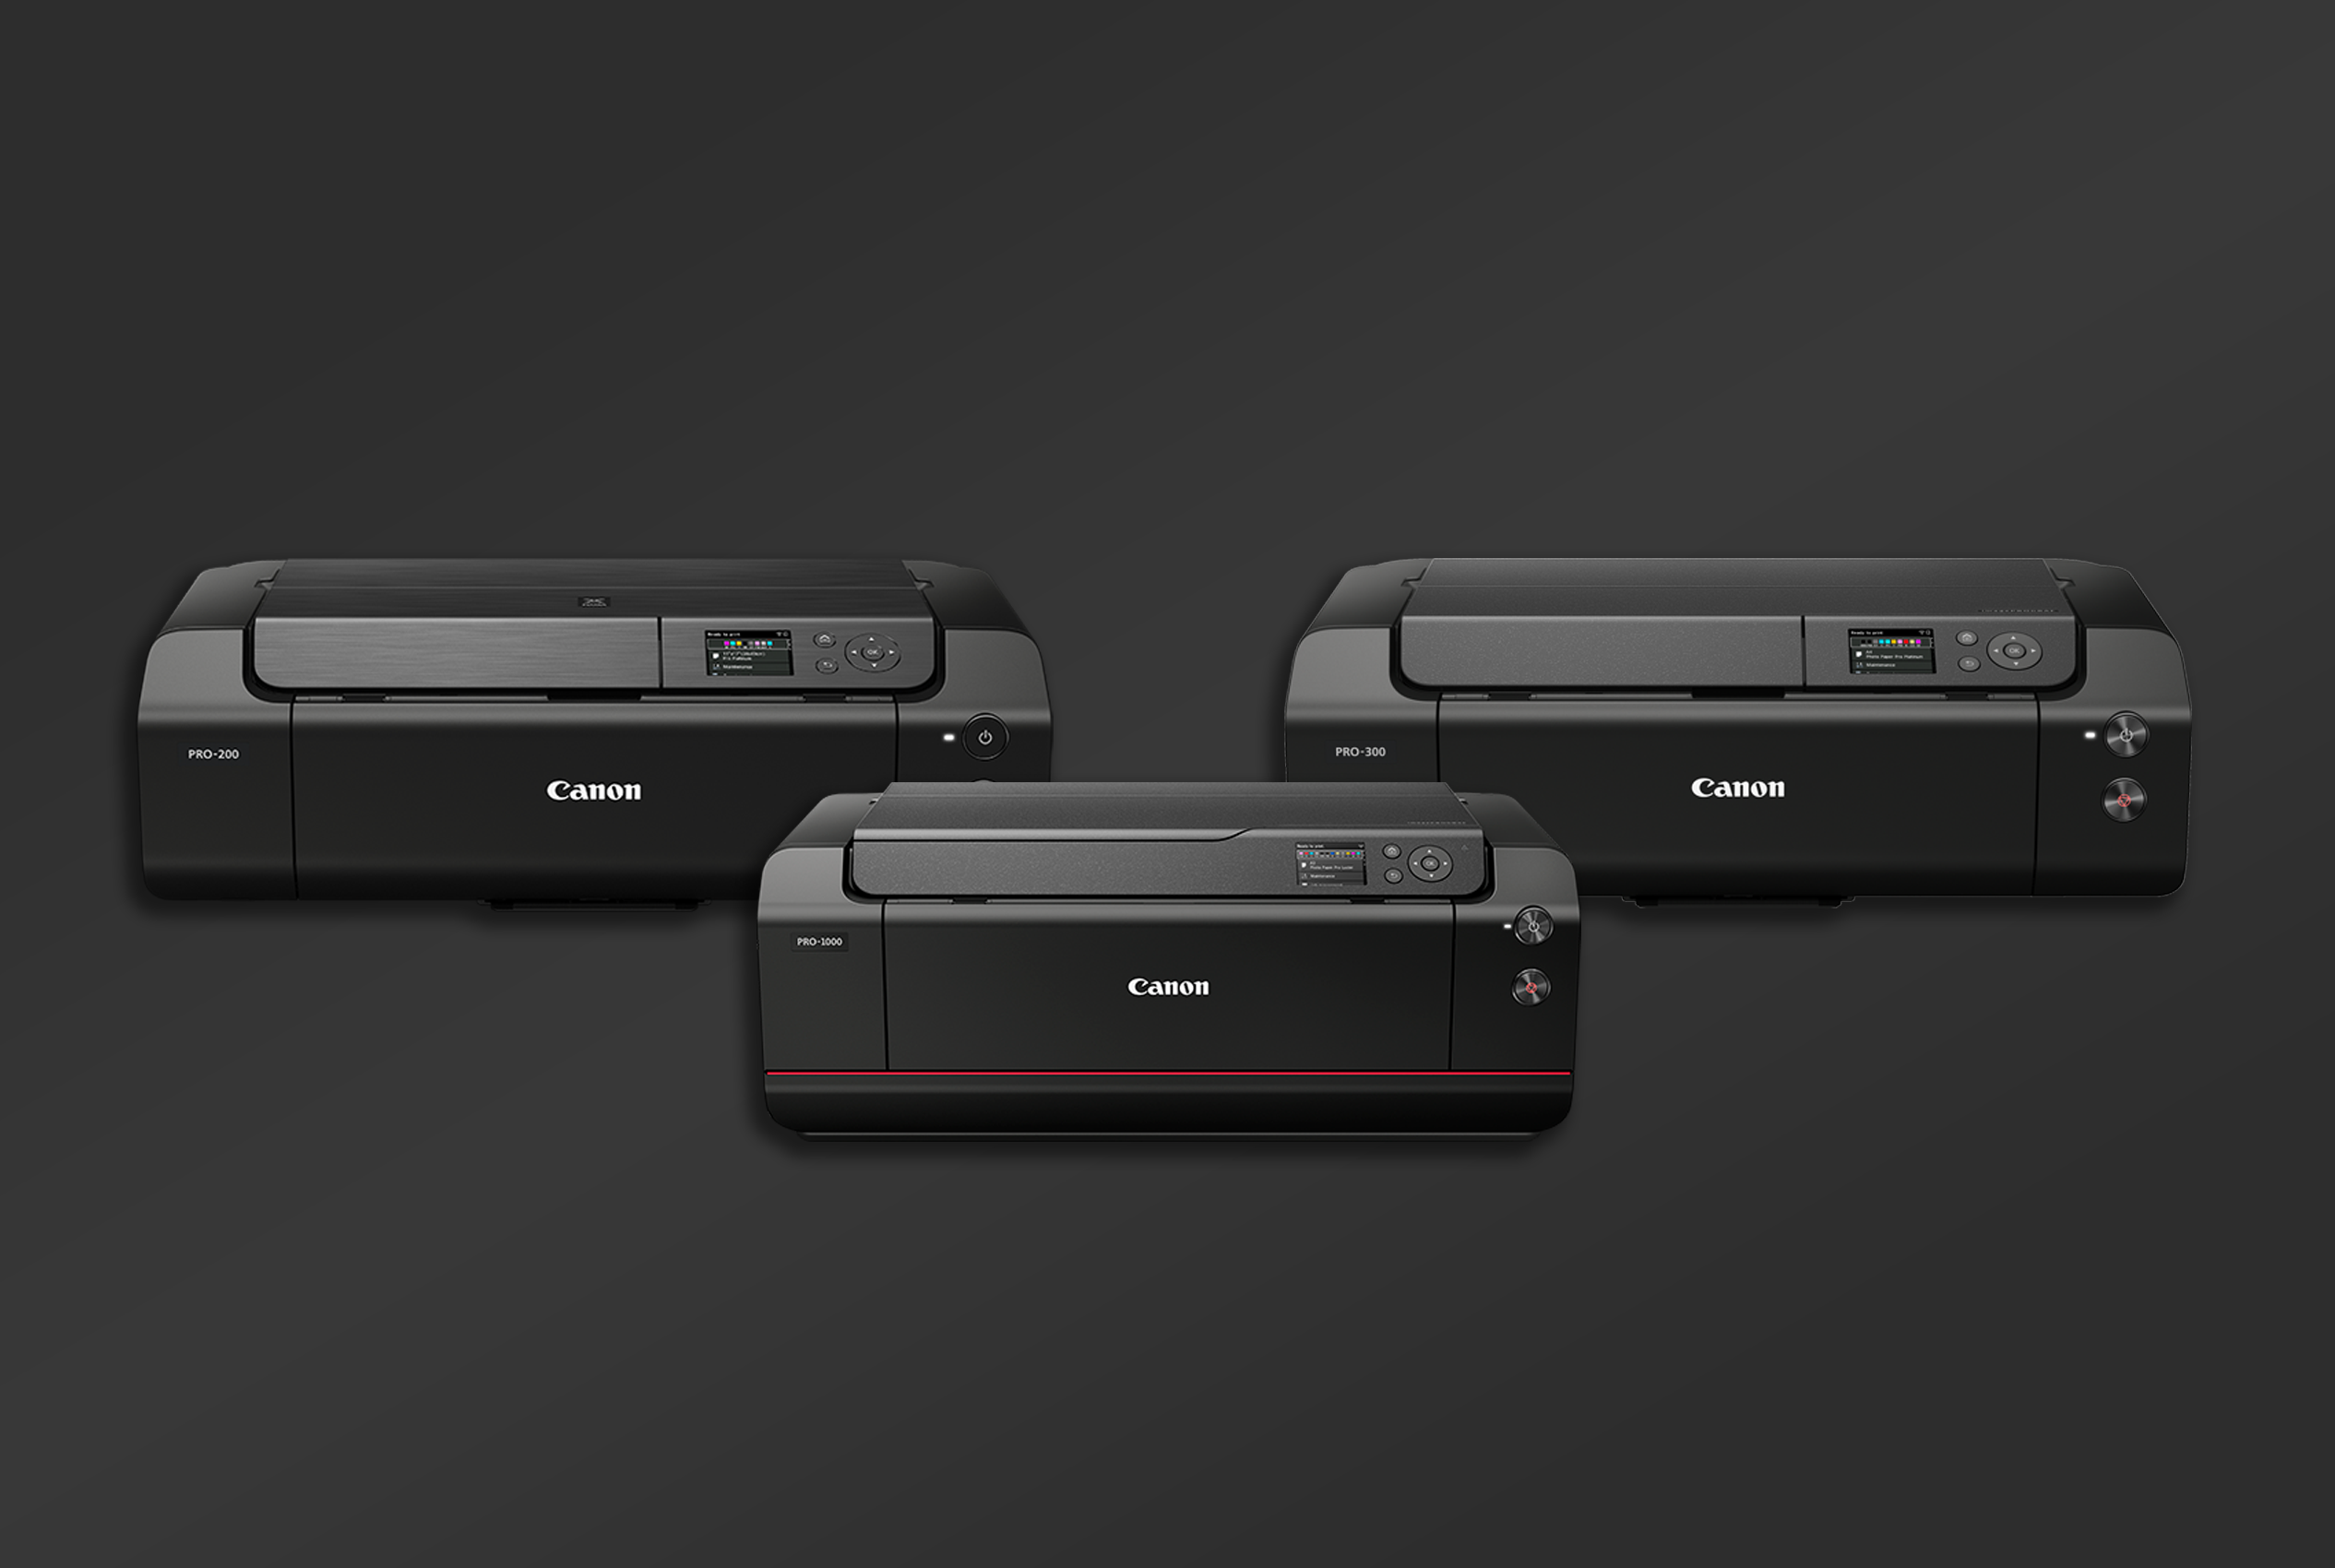 Canon imageprograf pro-1000 inkjet printer